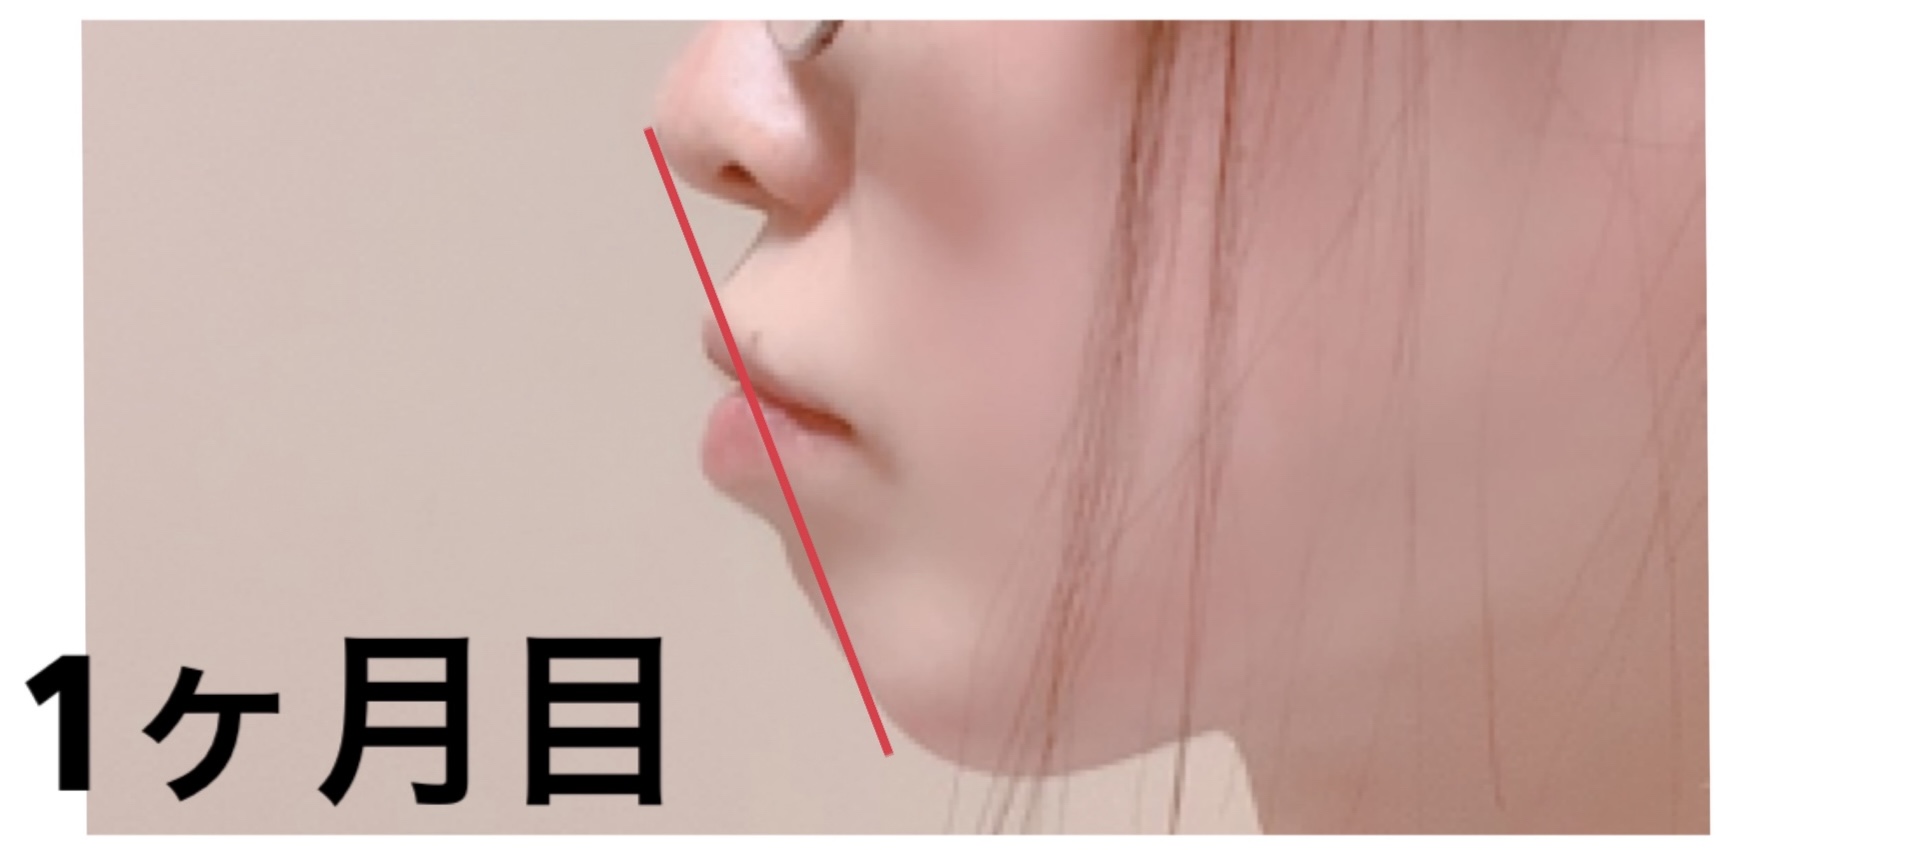 Emi Blog 歯列矯正 横顔の変化 口ゴボ改善１ヶ月目 10ヶ月目